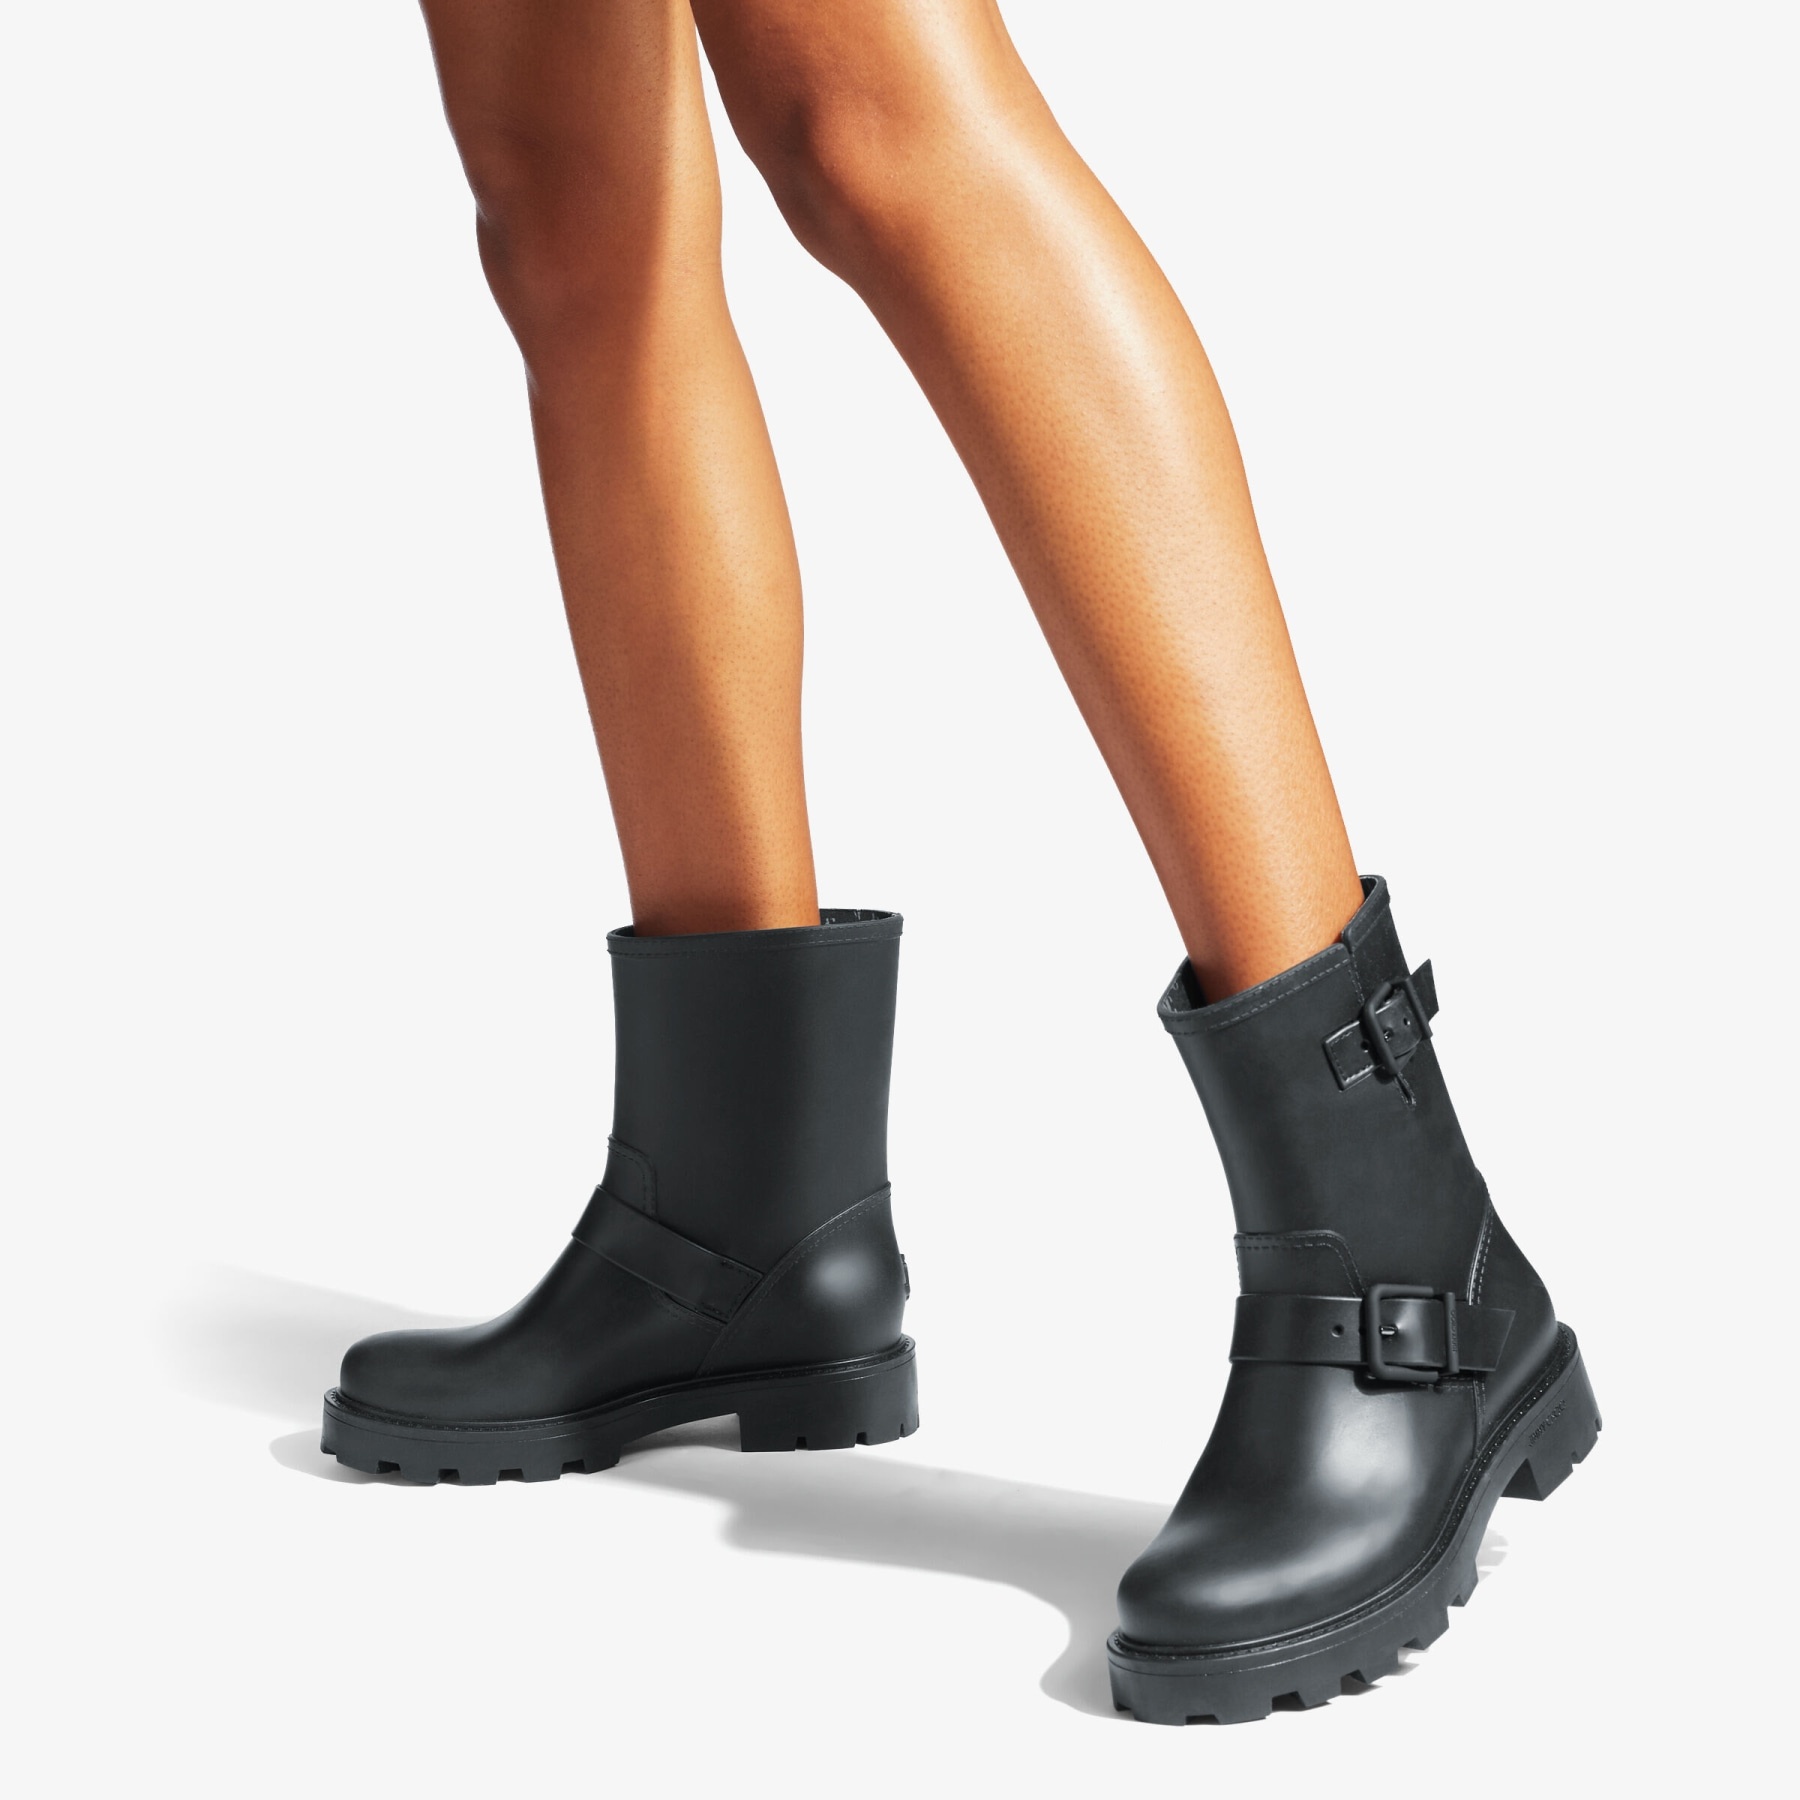 Yael Flat
Black Biodegradable Rubber Rain Boots - 2